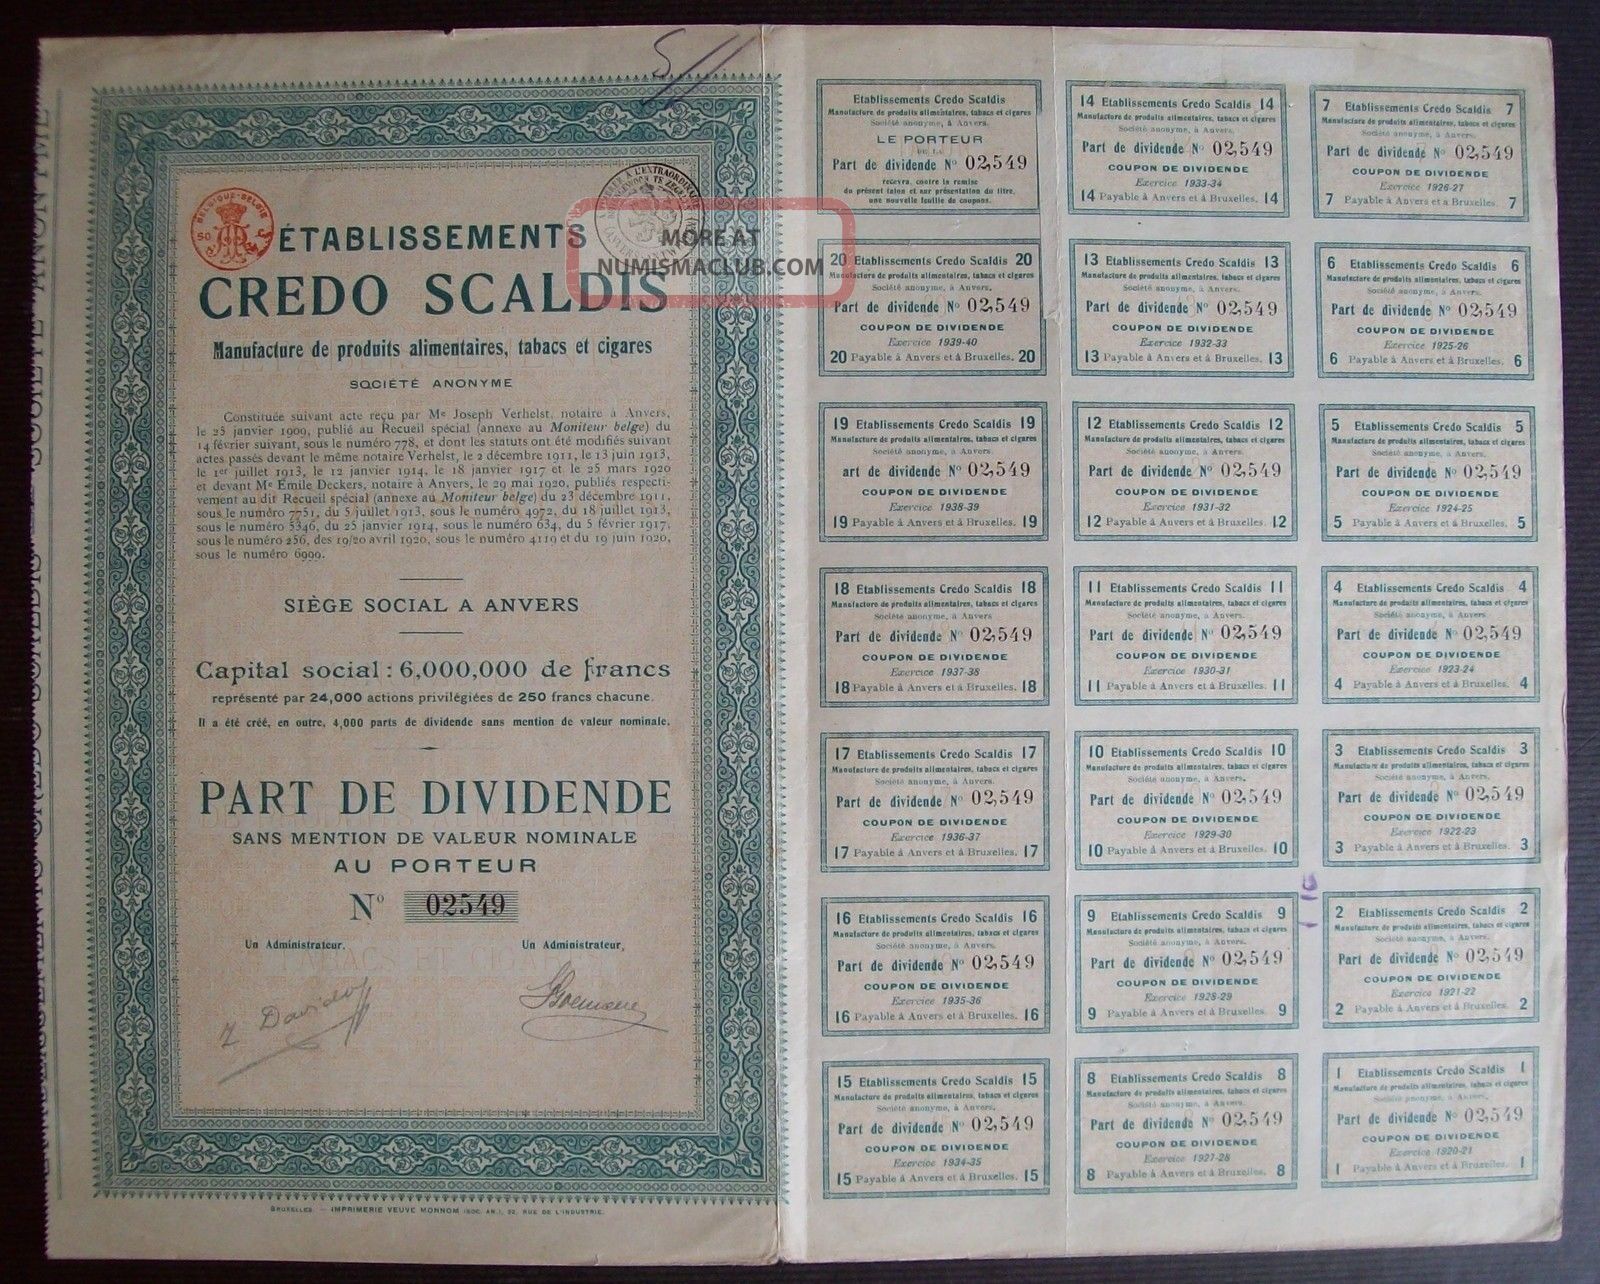 Belgium 1920 Bond - Credo Scaldis Tabacs Cigares Anvers - With Coupons.  A9766 World photo